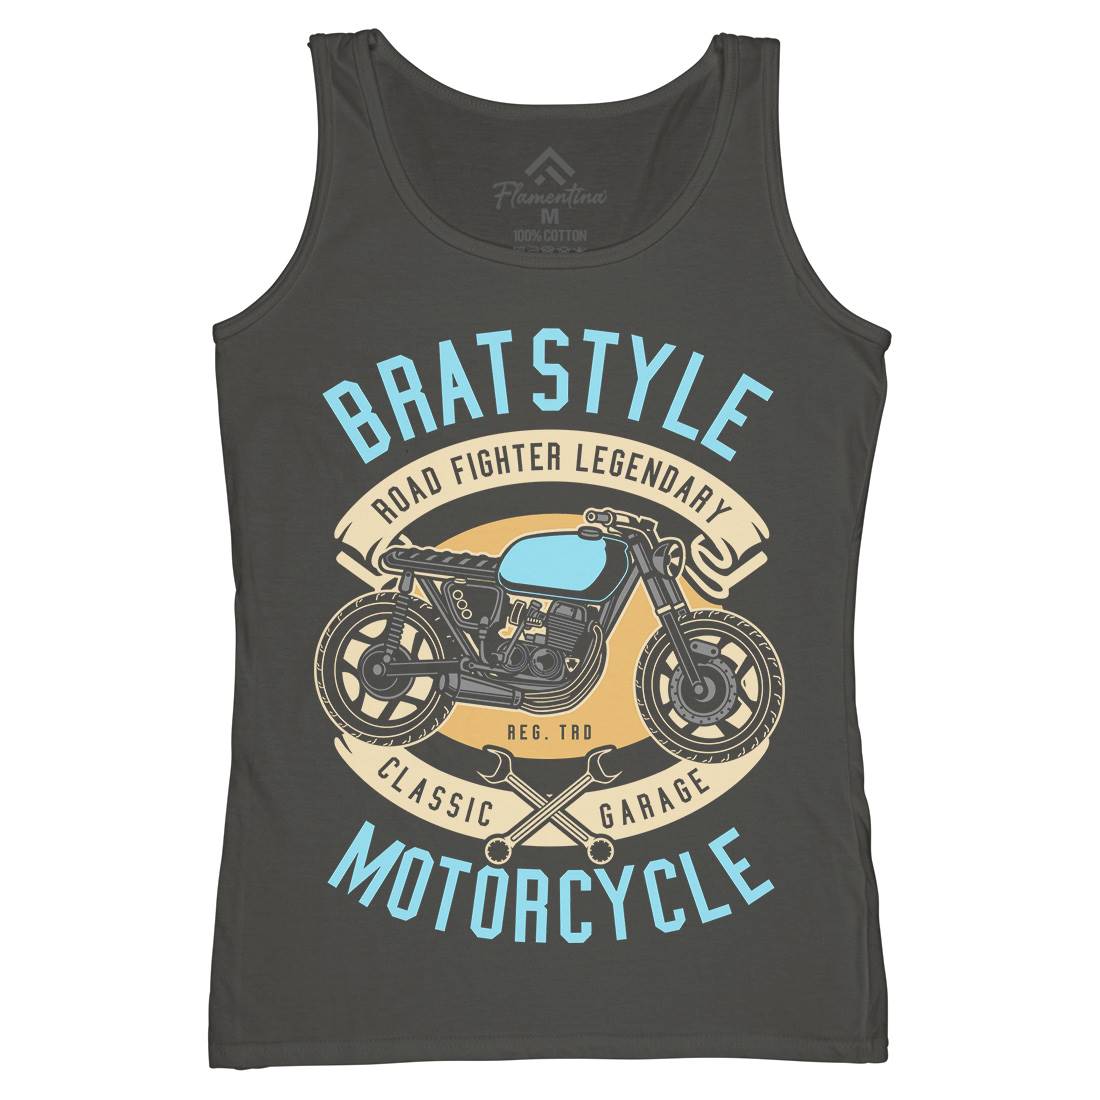 Brat Style Womens Organic Tank Top Vest Motorcycles D511